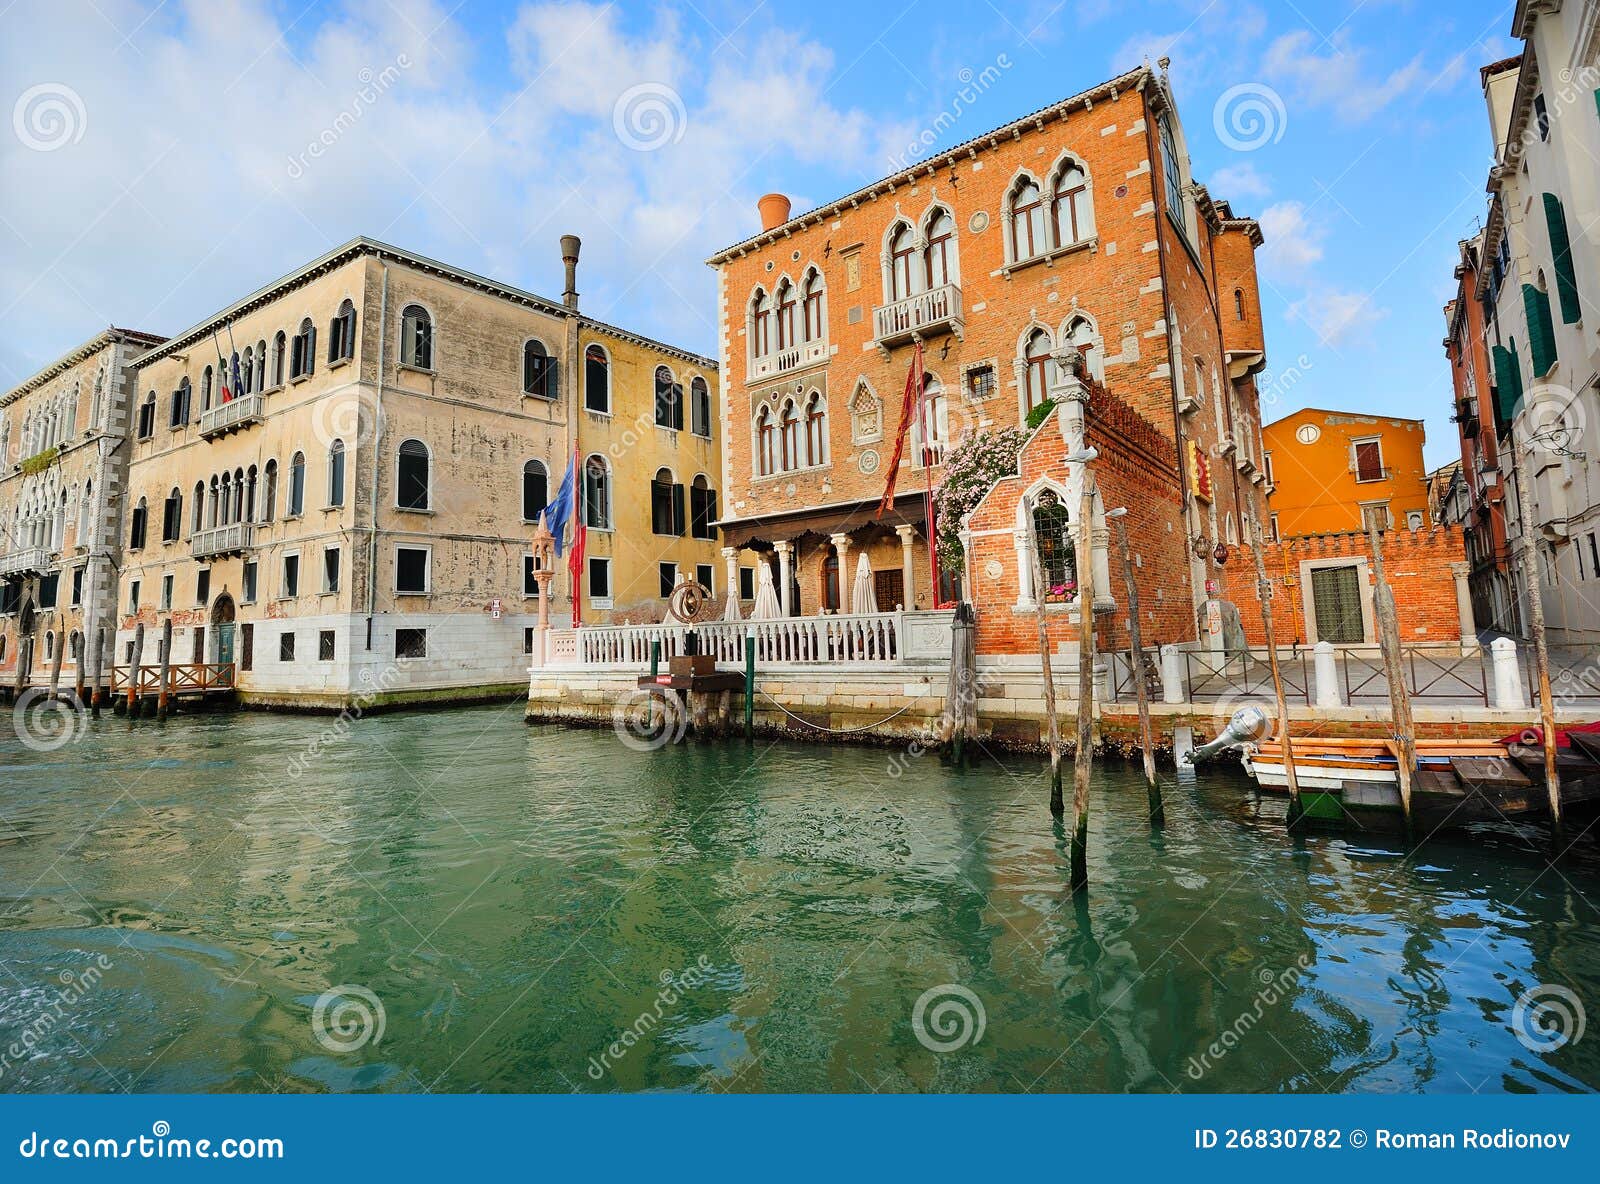 venetian palazzos on grand canal